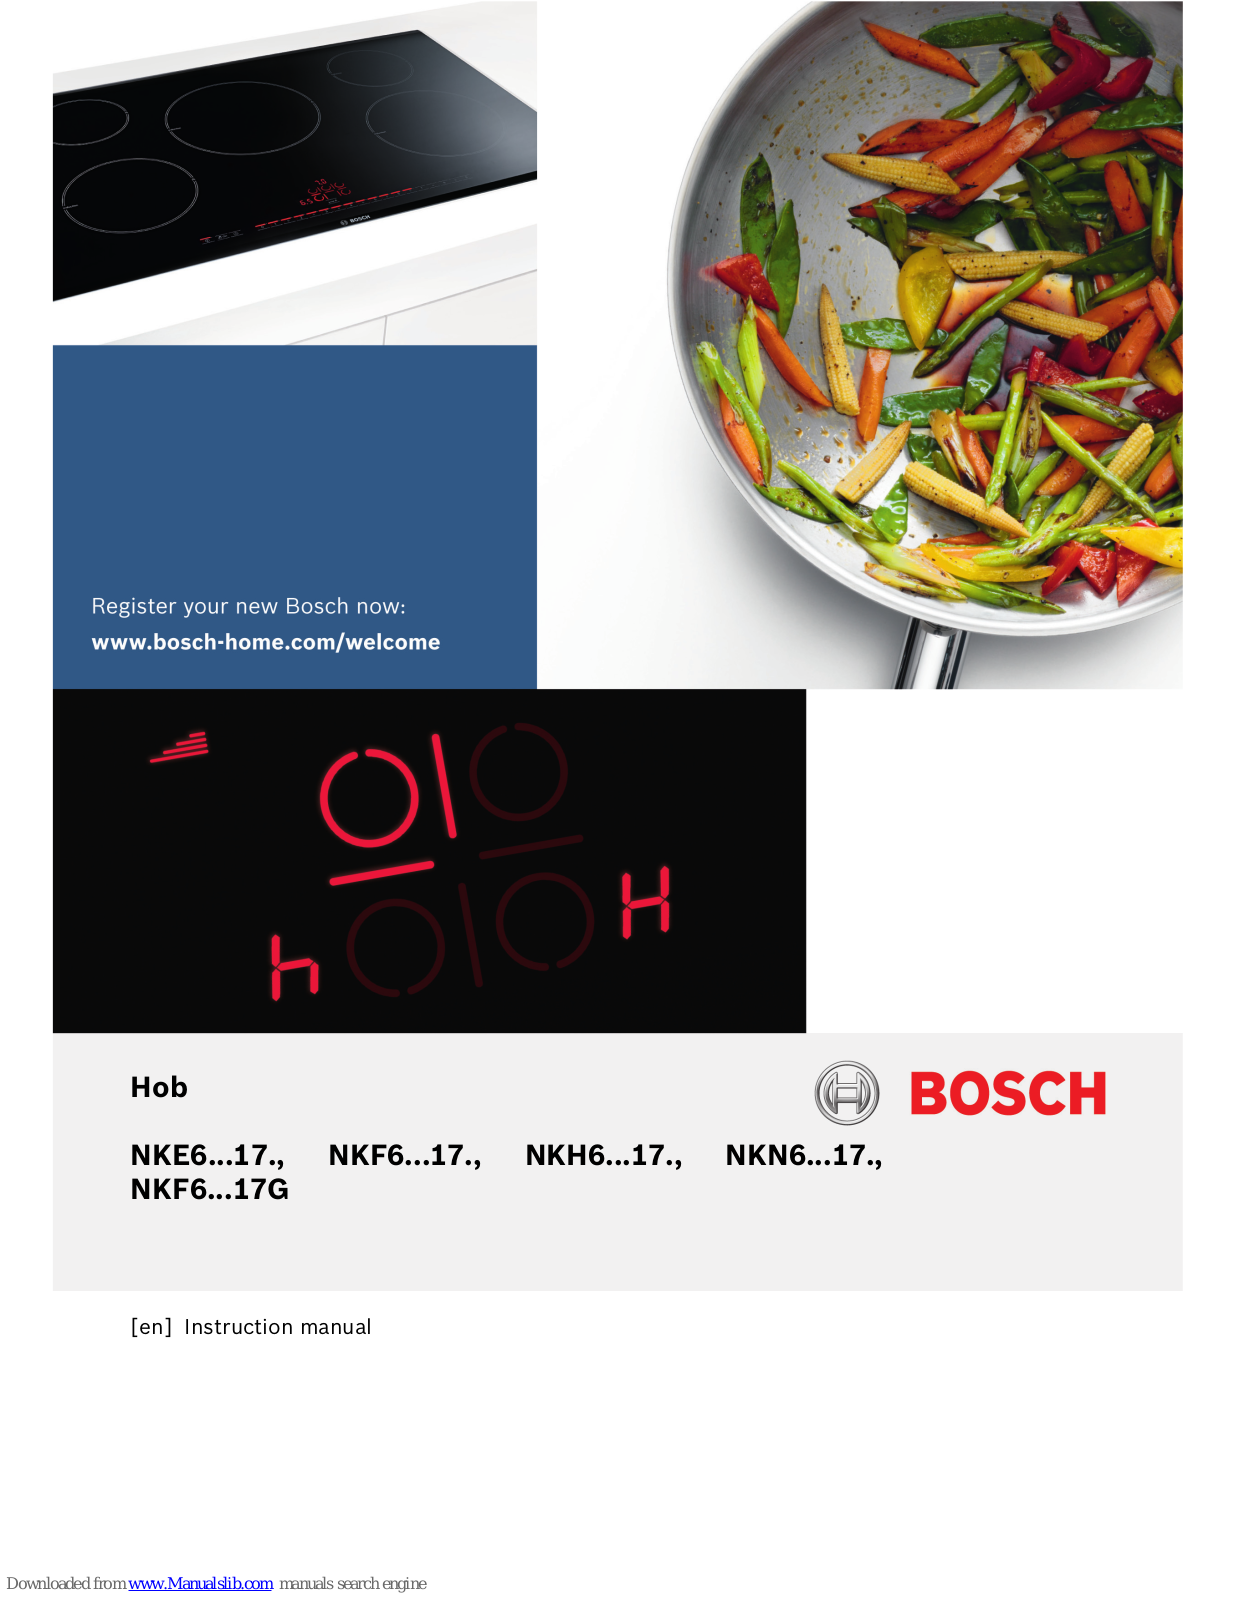 Bosch NKE6...17., NKH6 17, NKN6 17, NKF6 17, NKF6 17G Instruction Manual